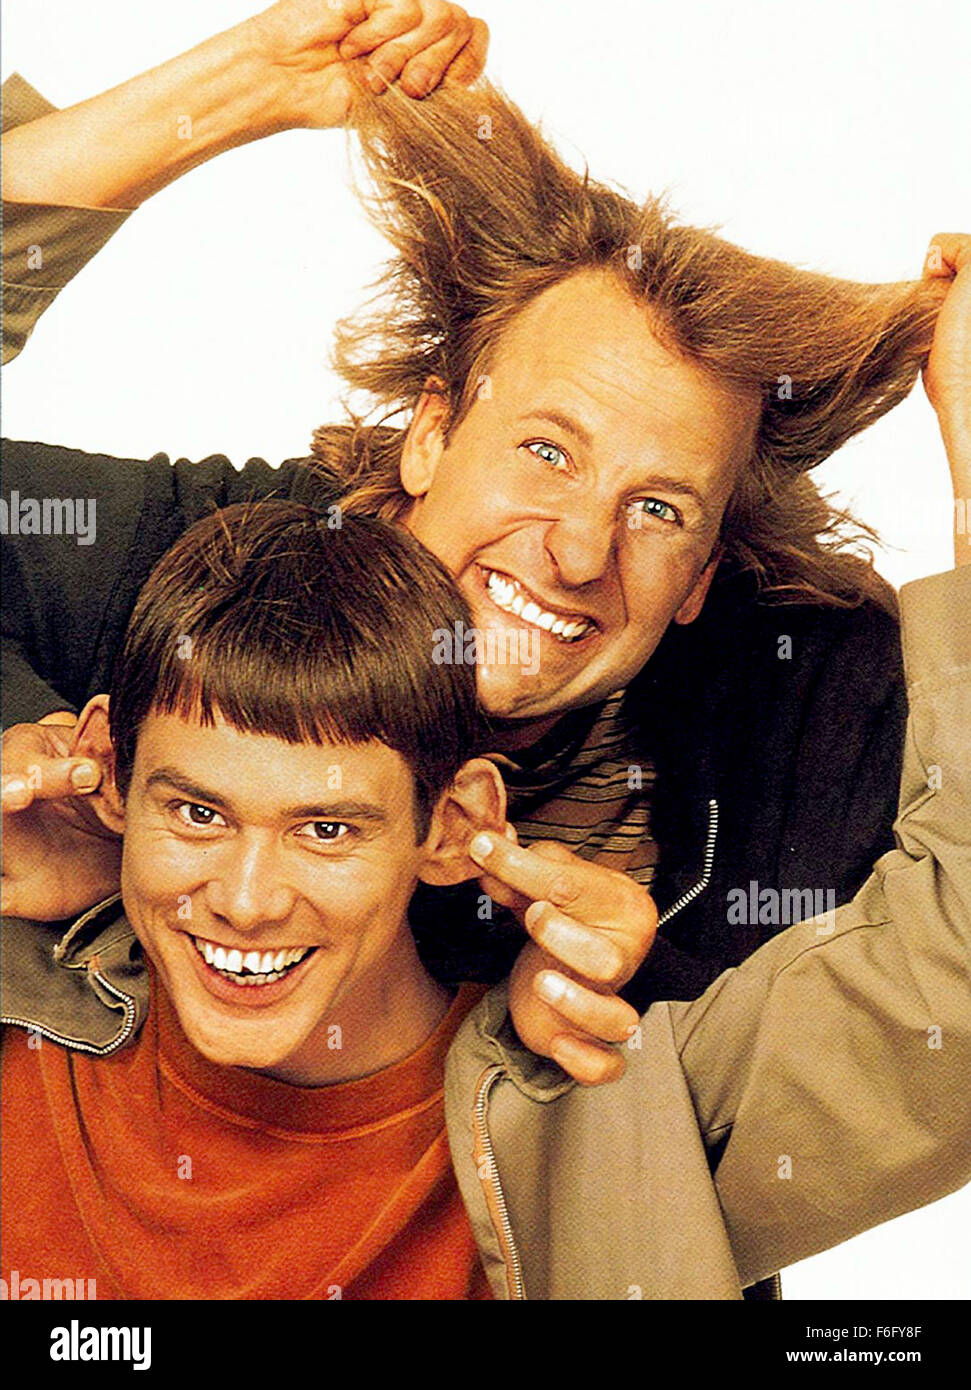 DUMB AND DUMBER  Pictured (l-r): Jim Carrey, Jeff Daniels  Credit: c New Line Cinema Stock Photo